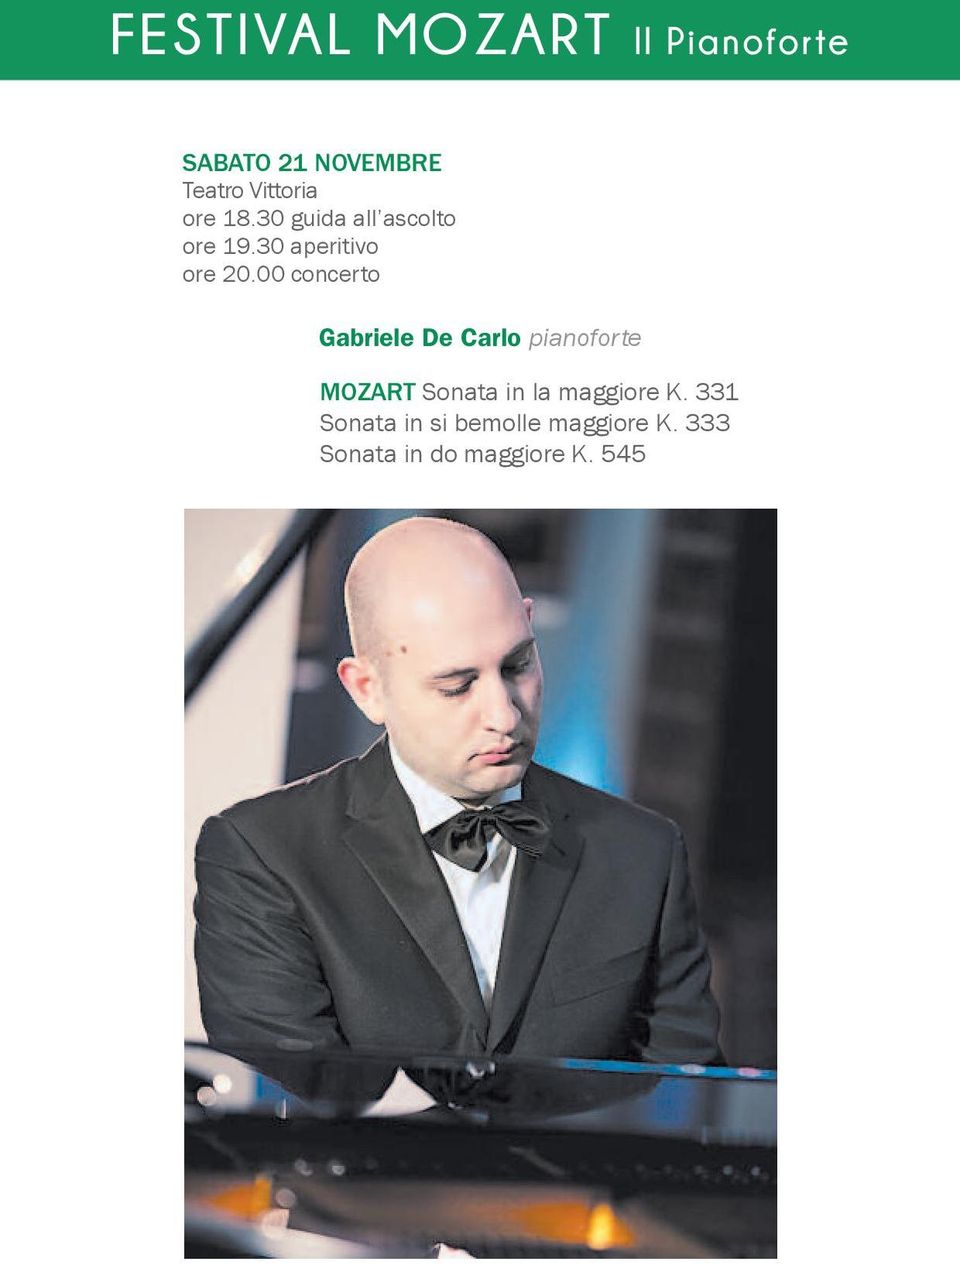 00 concerto Gabriele De Carlo pianoforte MOZART Sonata in la